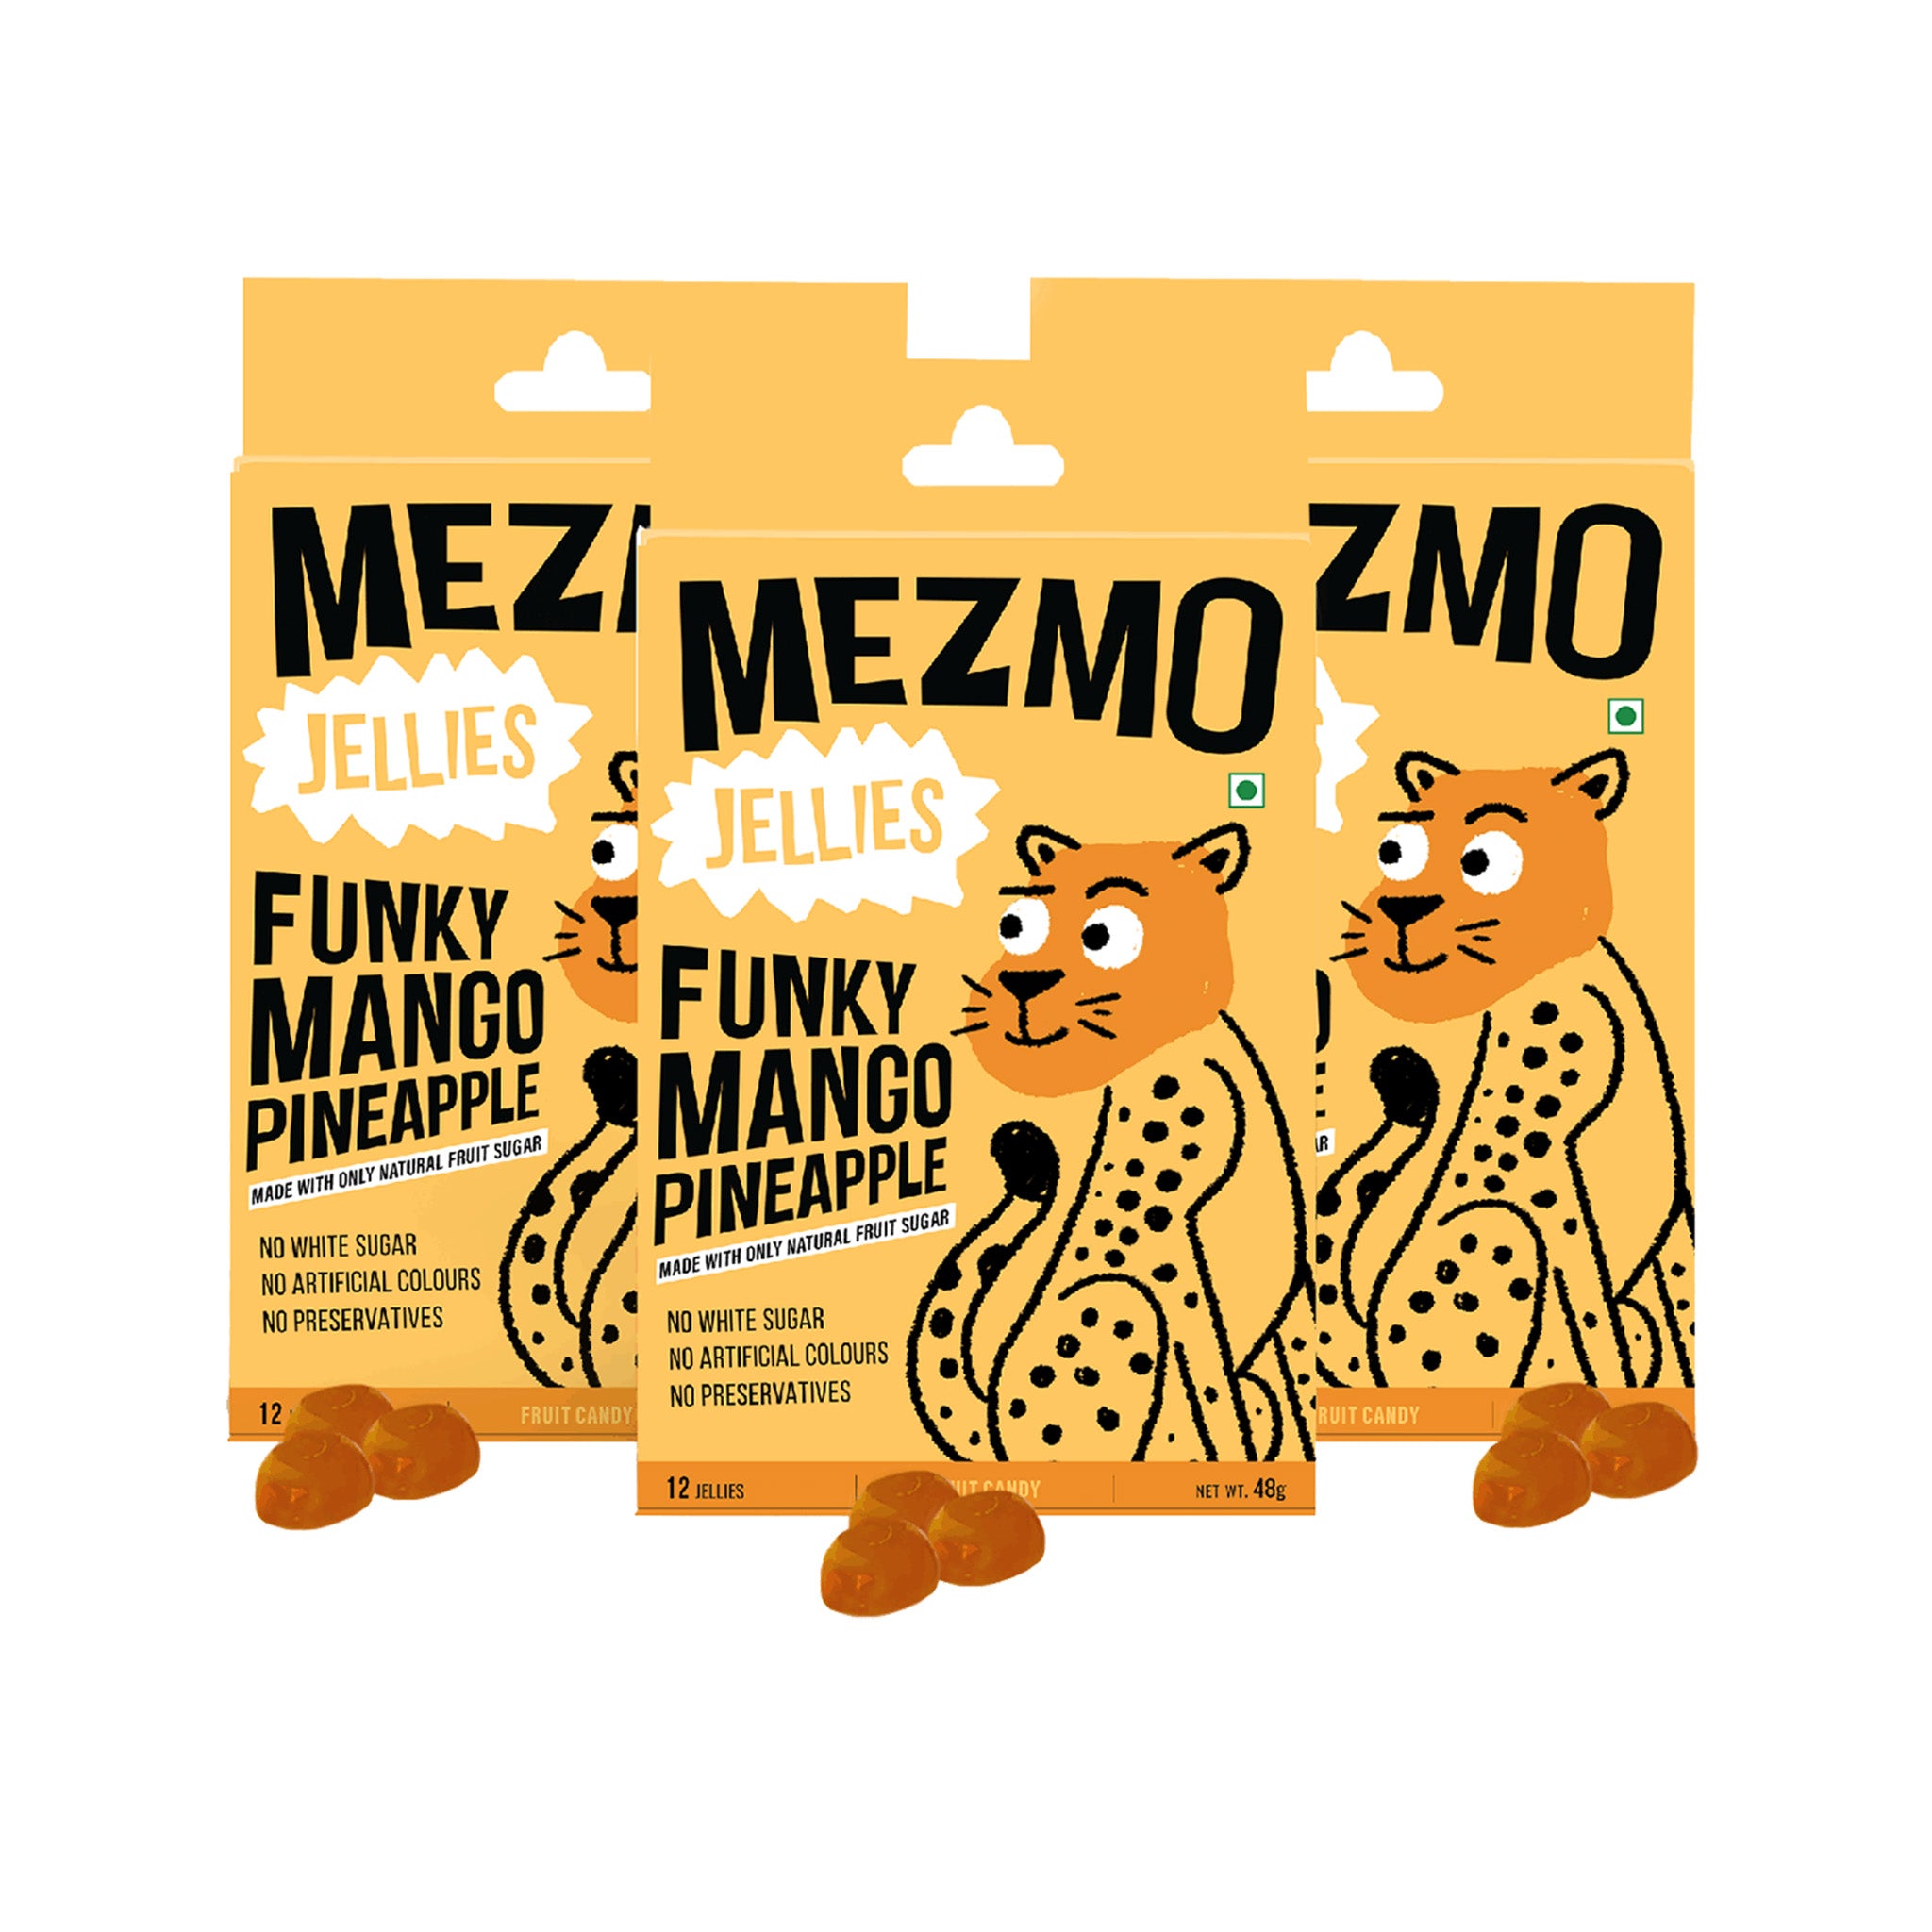 Mezmo Funky Mango Pineapple Pack of 3 ( 36 Jellies)